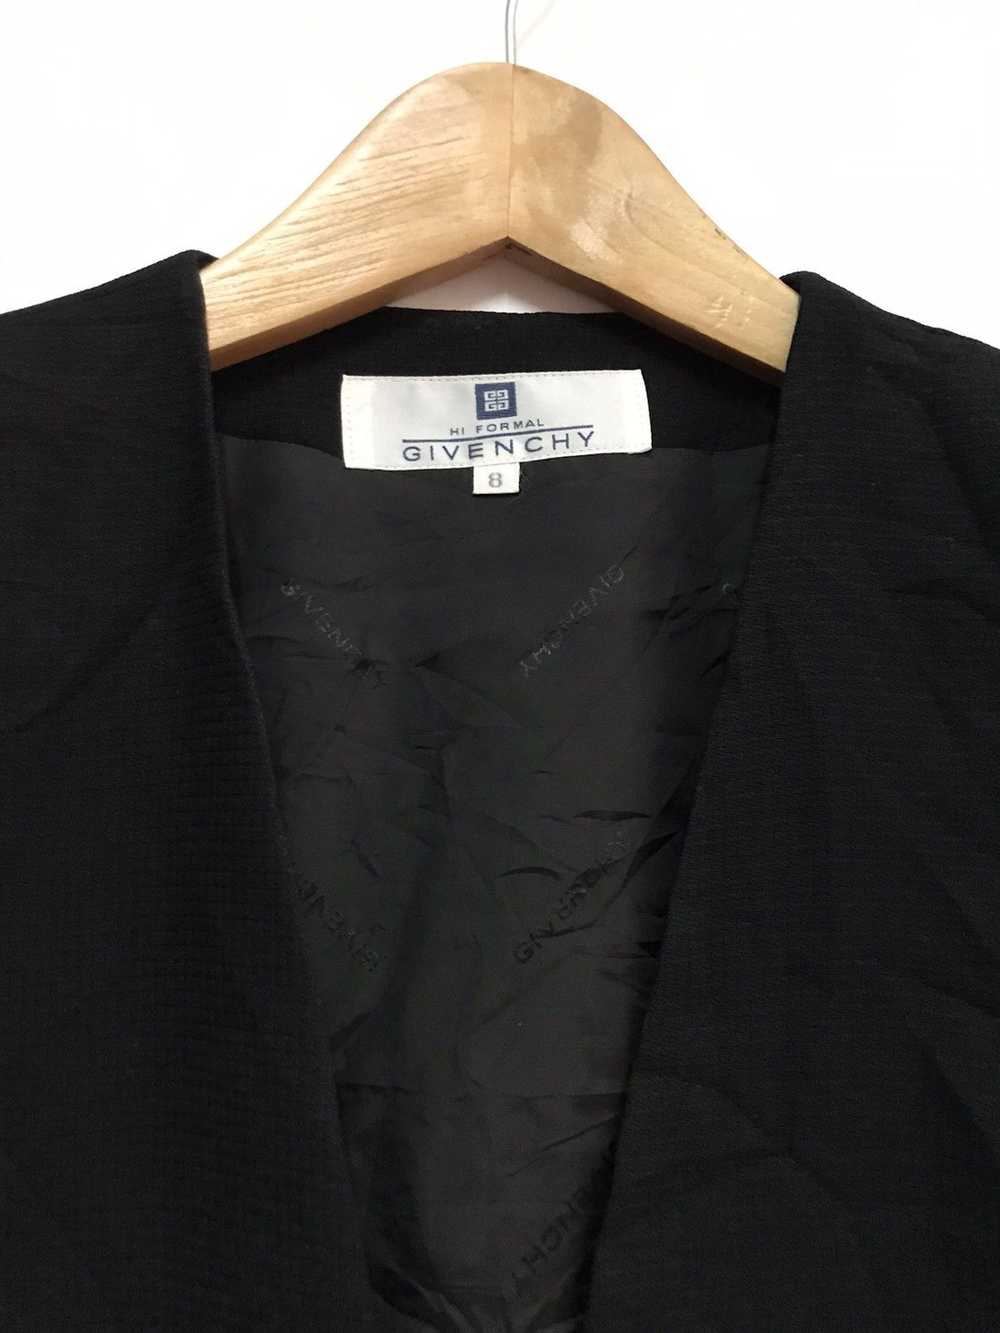 Givenchy Givenchy formal blazer coat - image 3